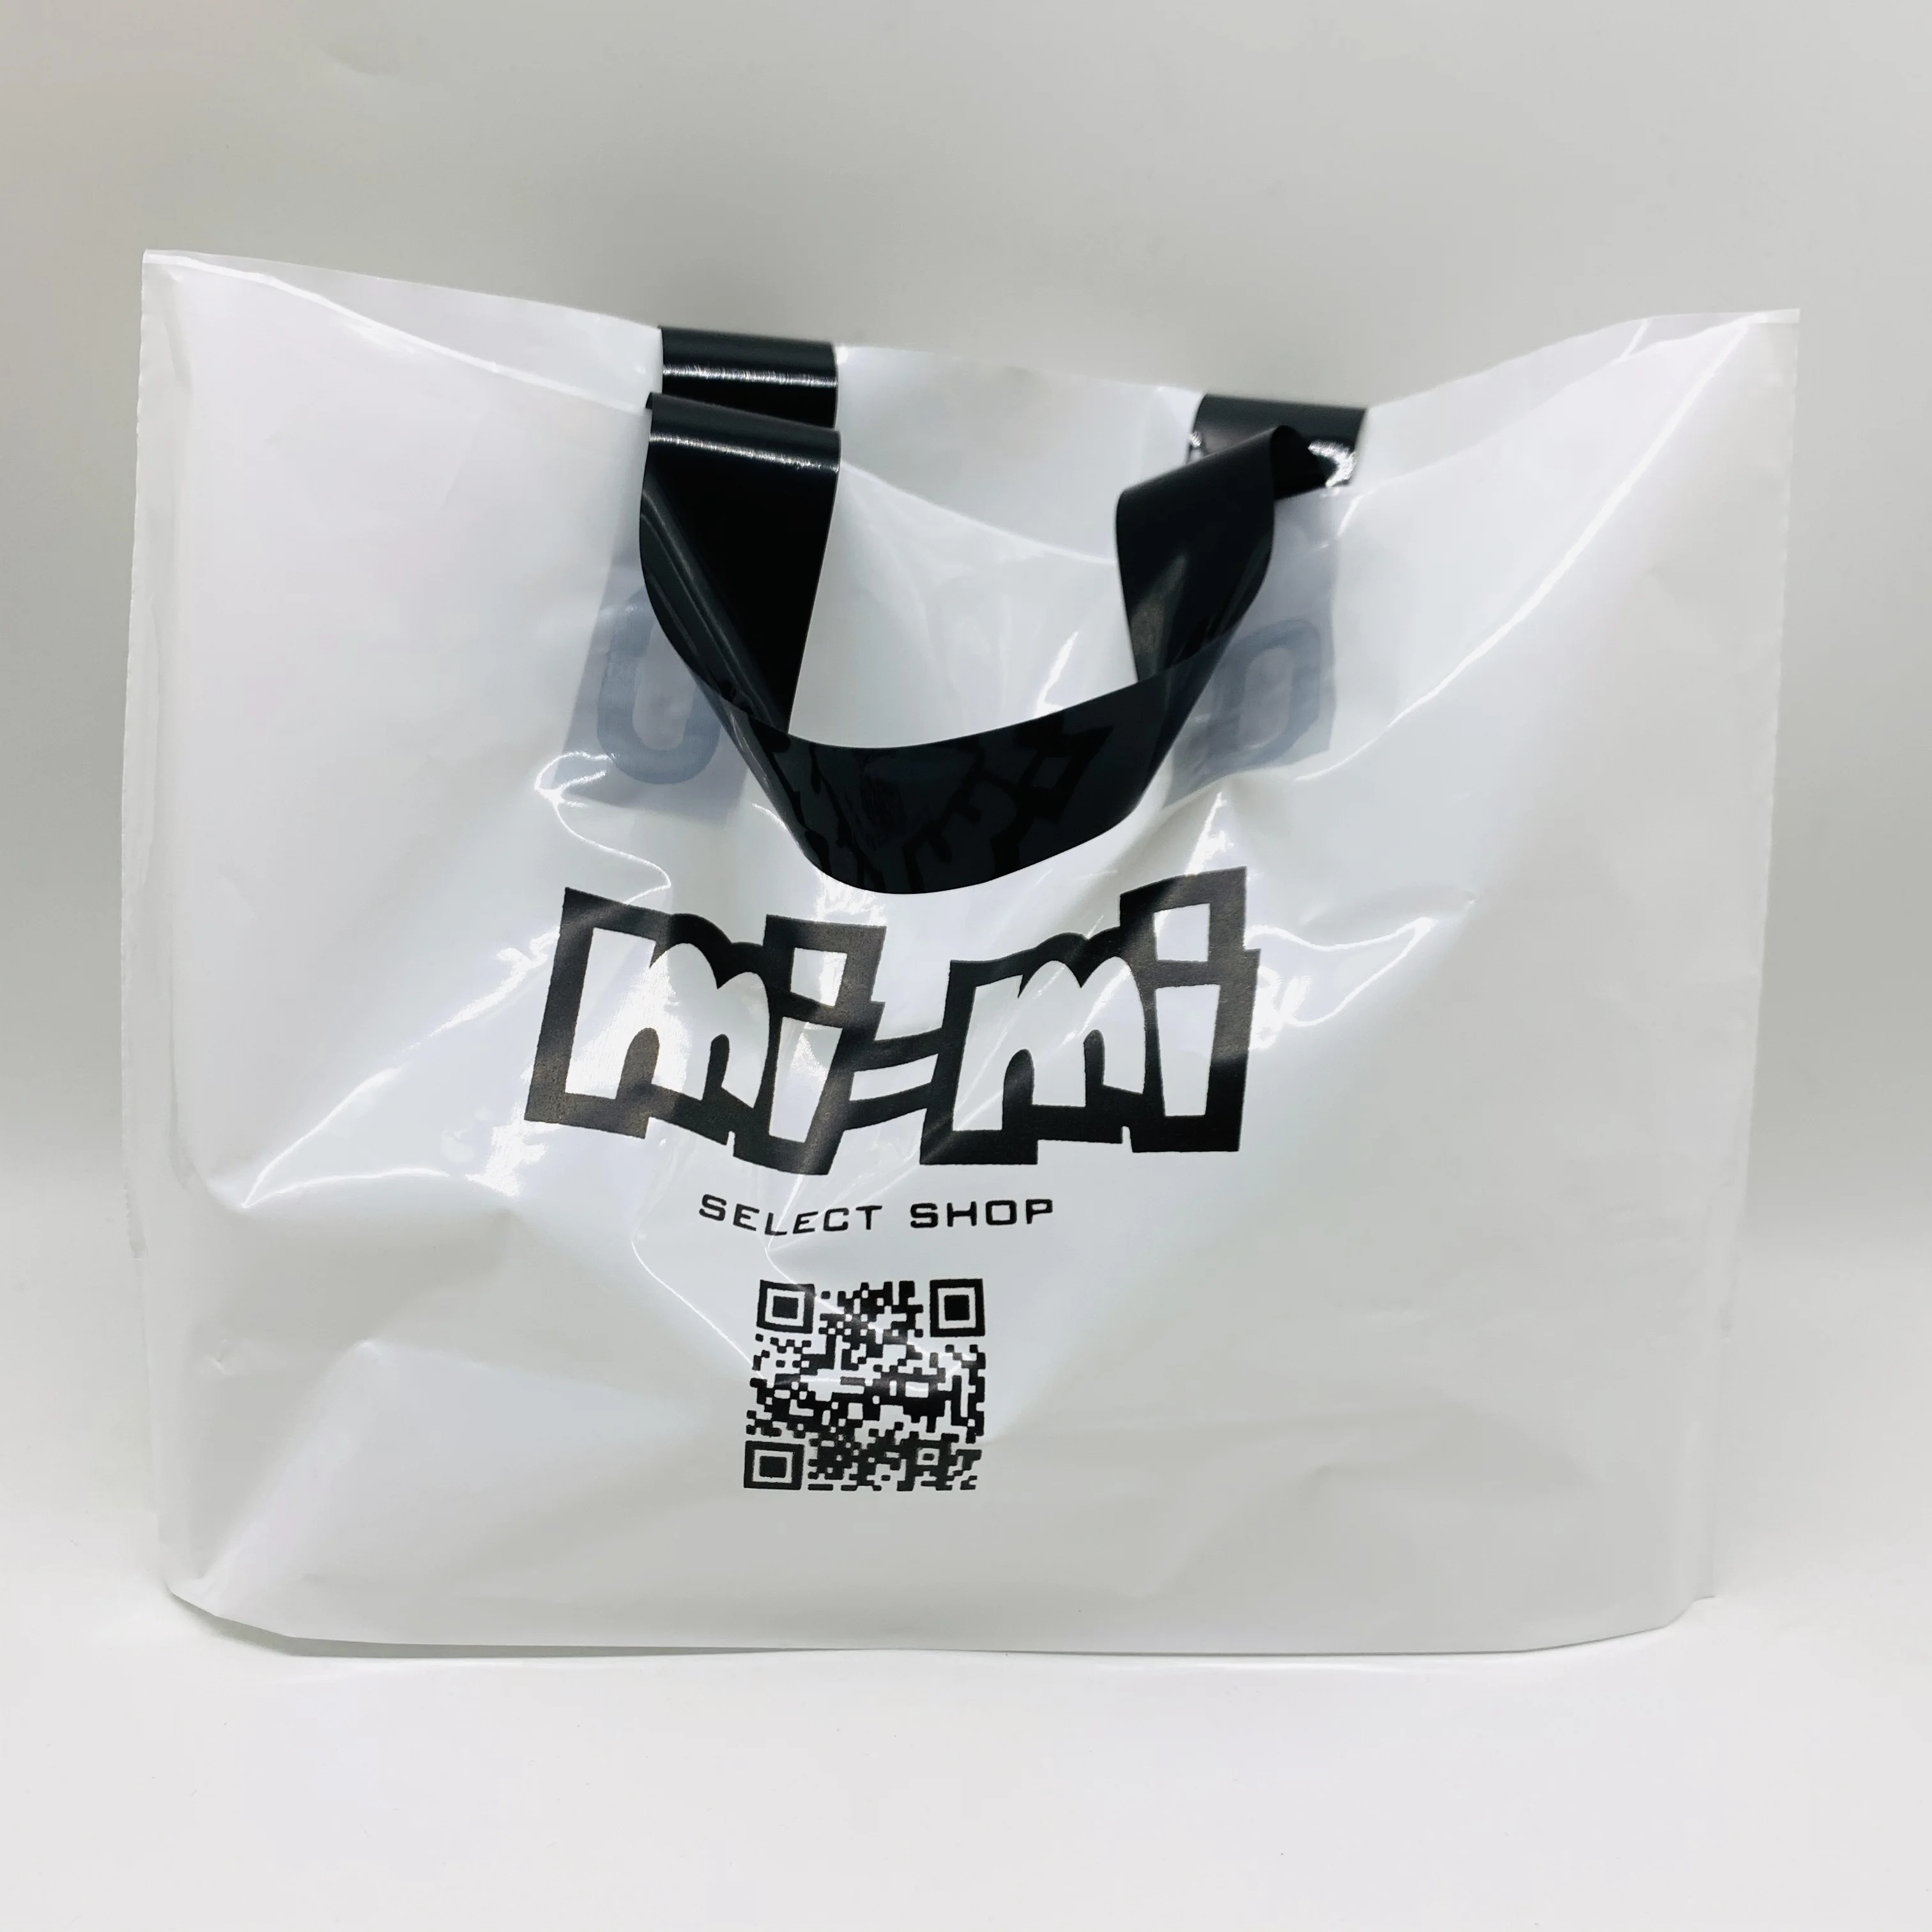 Buy Wholesale China Wholesale Retail Plastic Carry Bags Logo